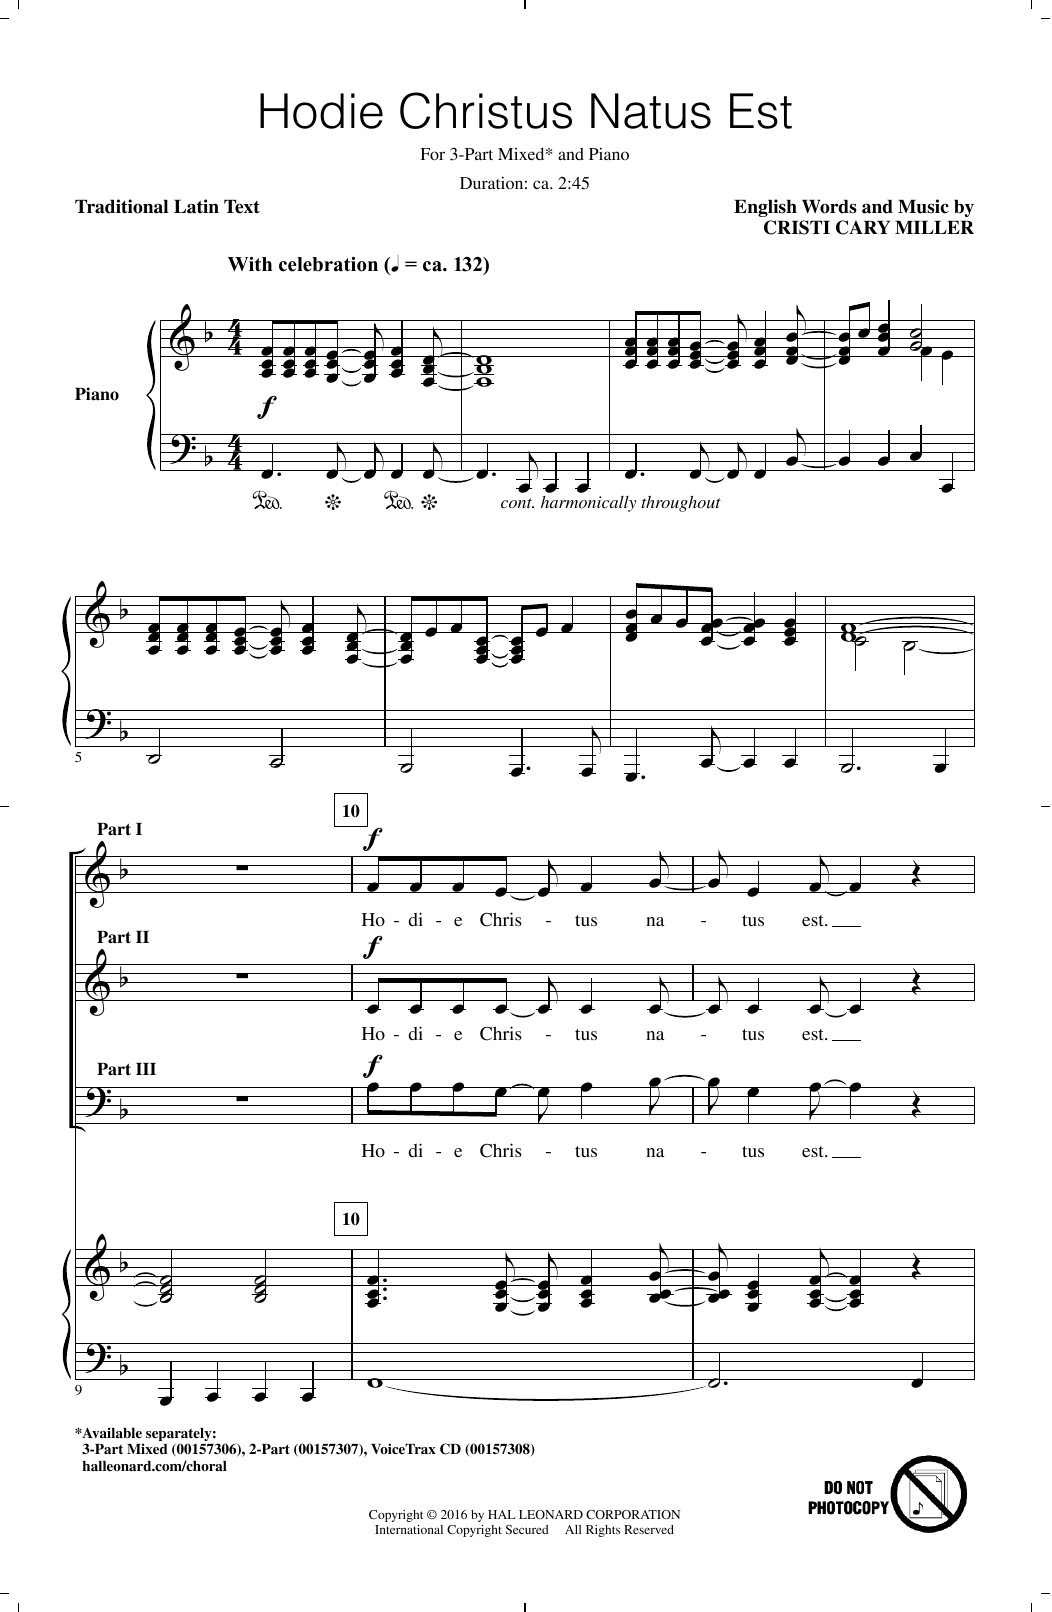 Cristi Cary Miller Hodie Christus Natus Est Sheet Music Notes & Chords for 2-Part Choir - Download or Print PDF